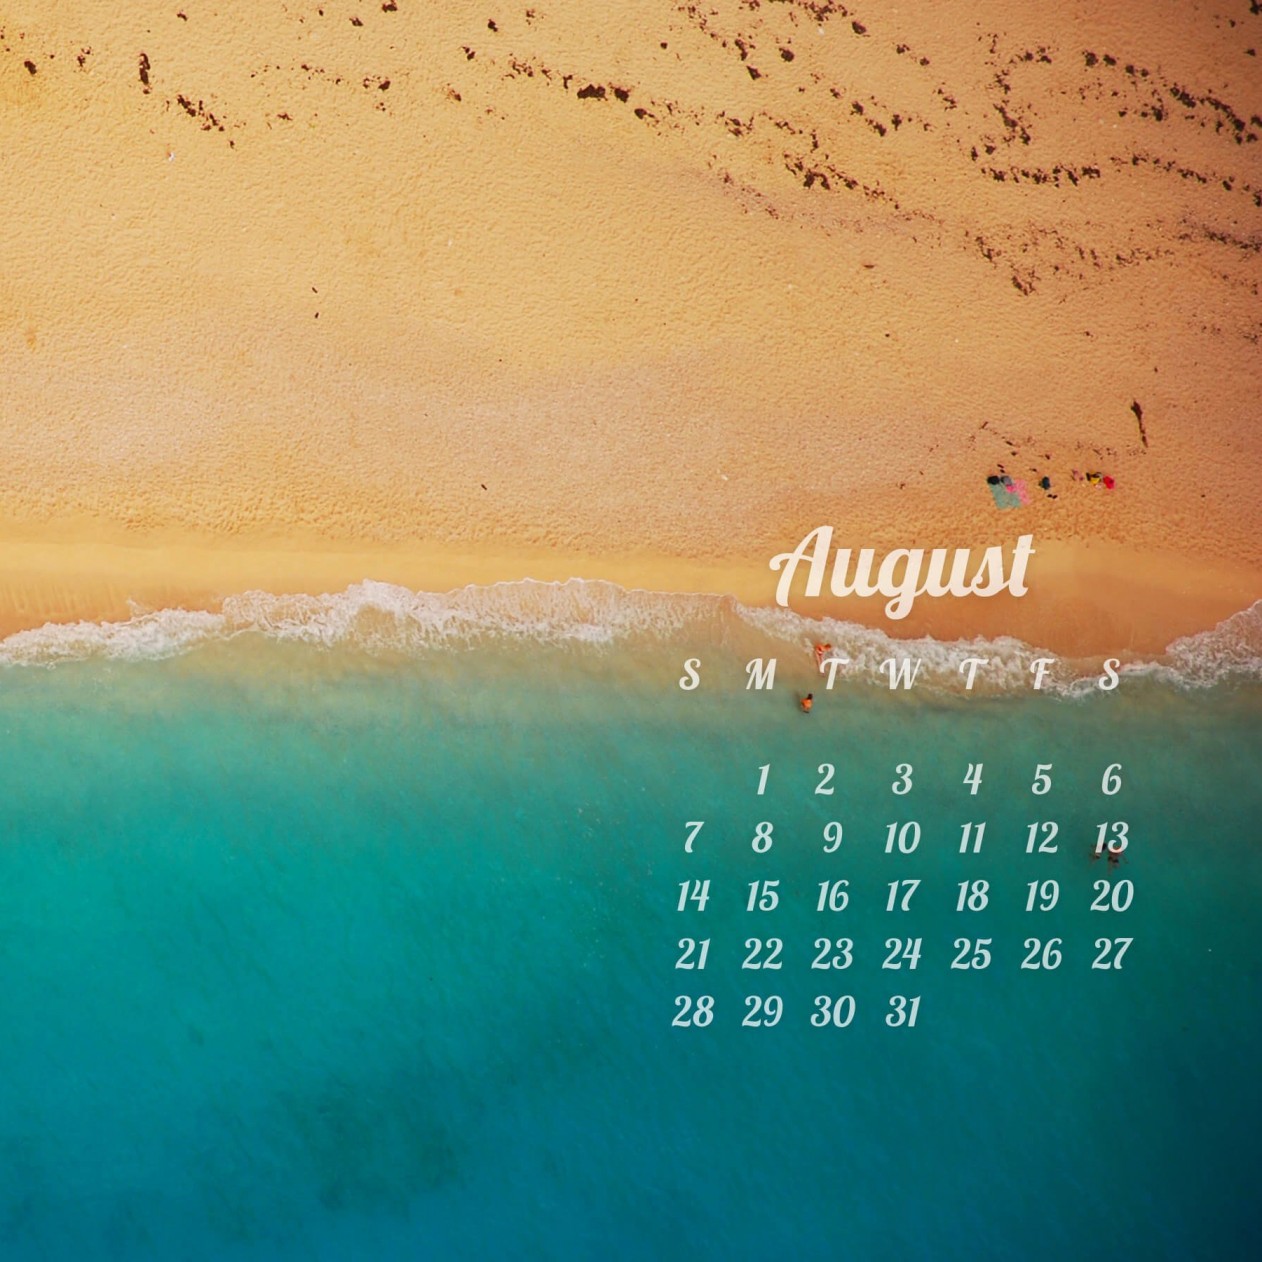 August 2016 Calendar Wallpaper for Apple iPad mini